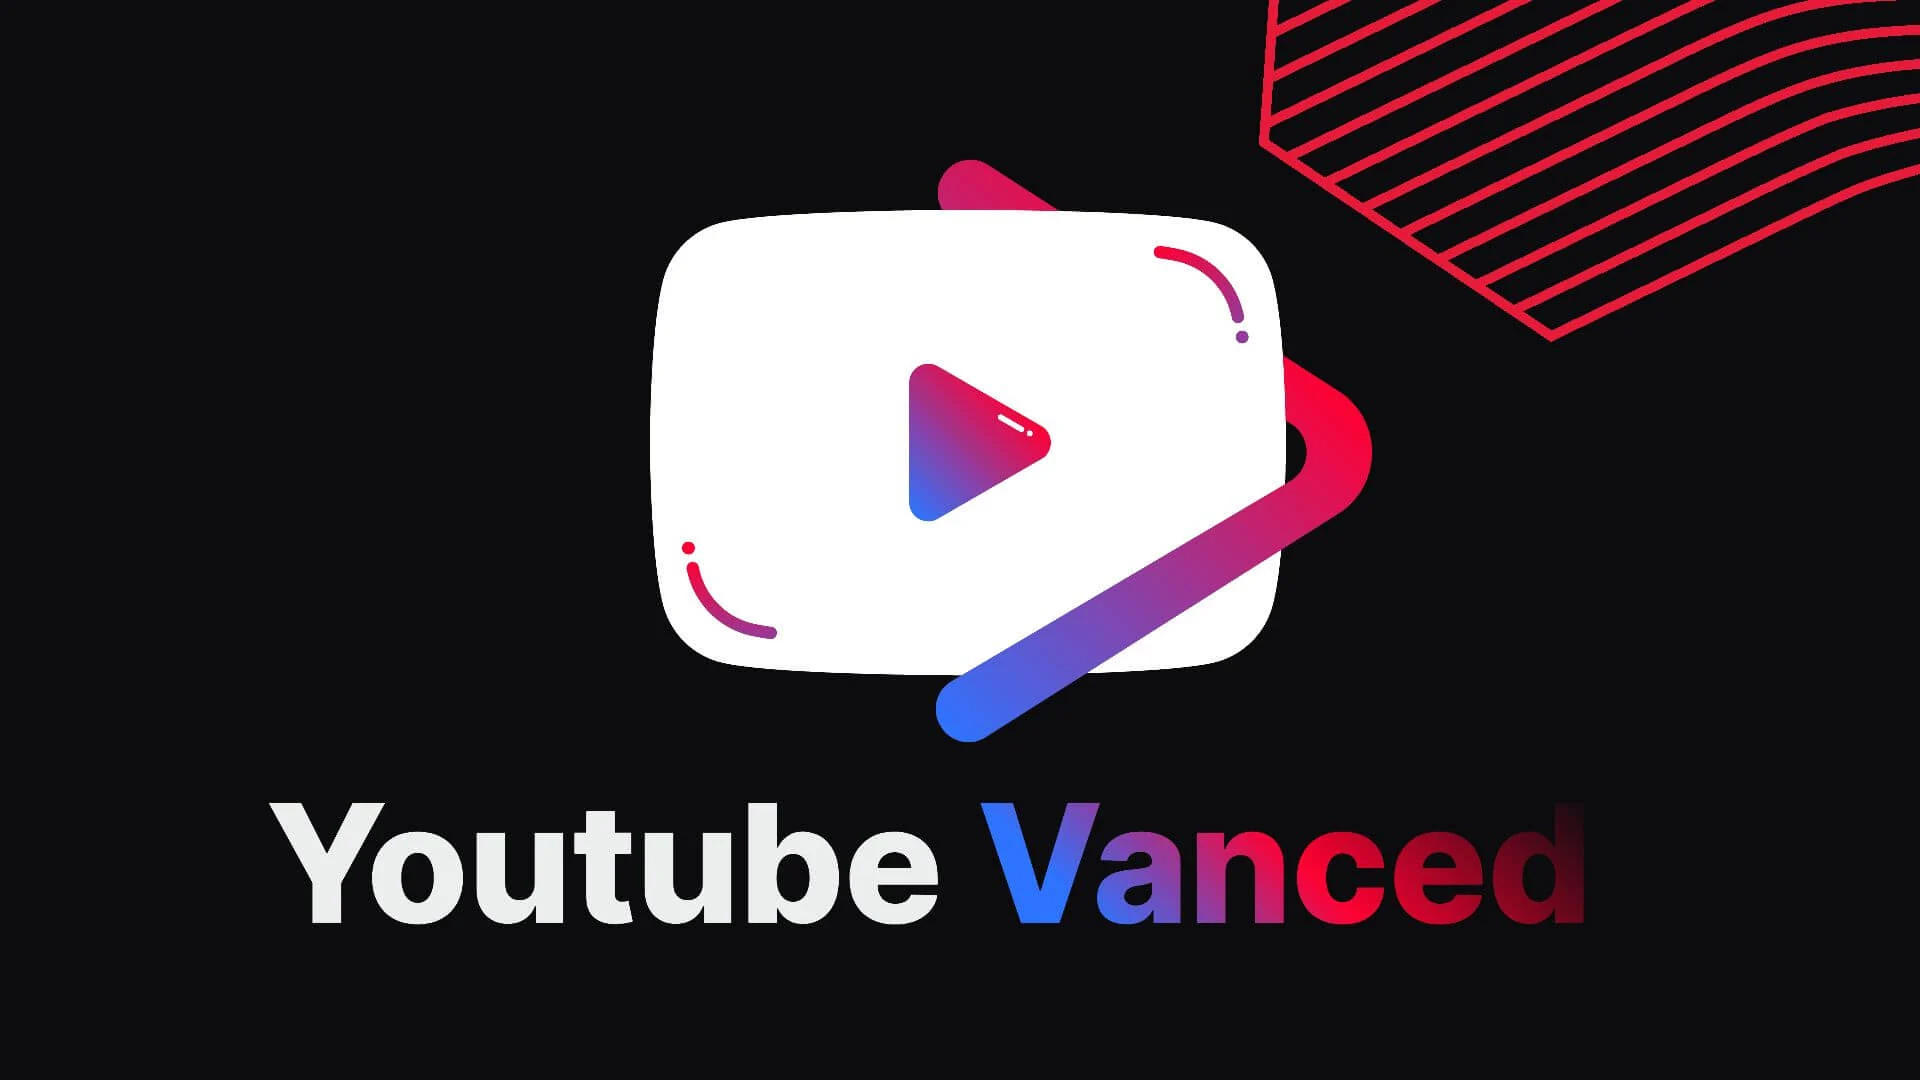 Youtube Vanced - دانلود یوتیوب ونسد Youtube Vanced 19.37.0 + نسخه پریمیوم و مود لایت